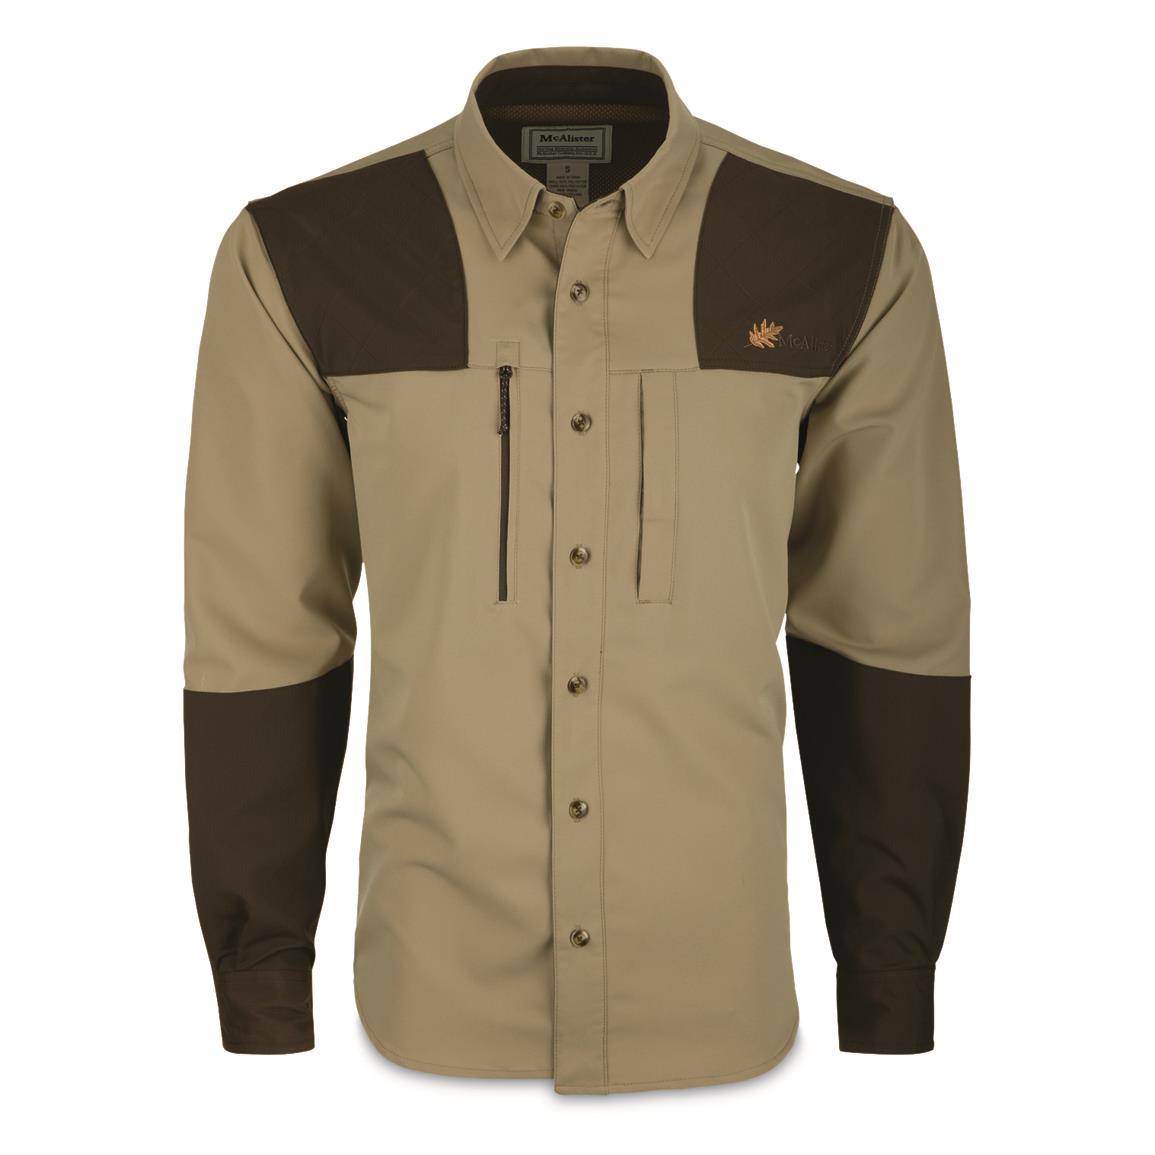 Drake Men's McAlister MST Upland Tech Shirt, Khaki/Brown